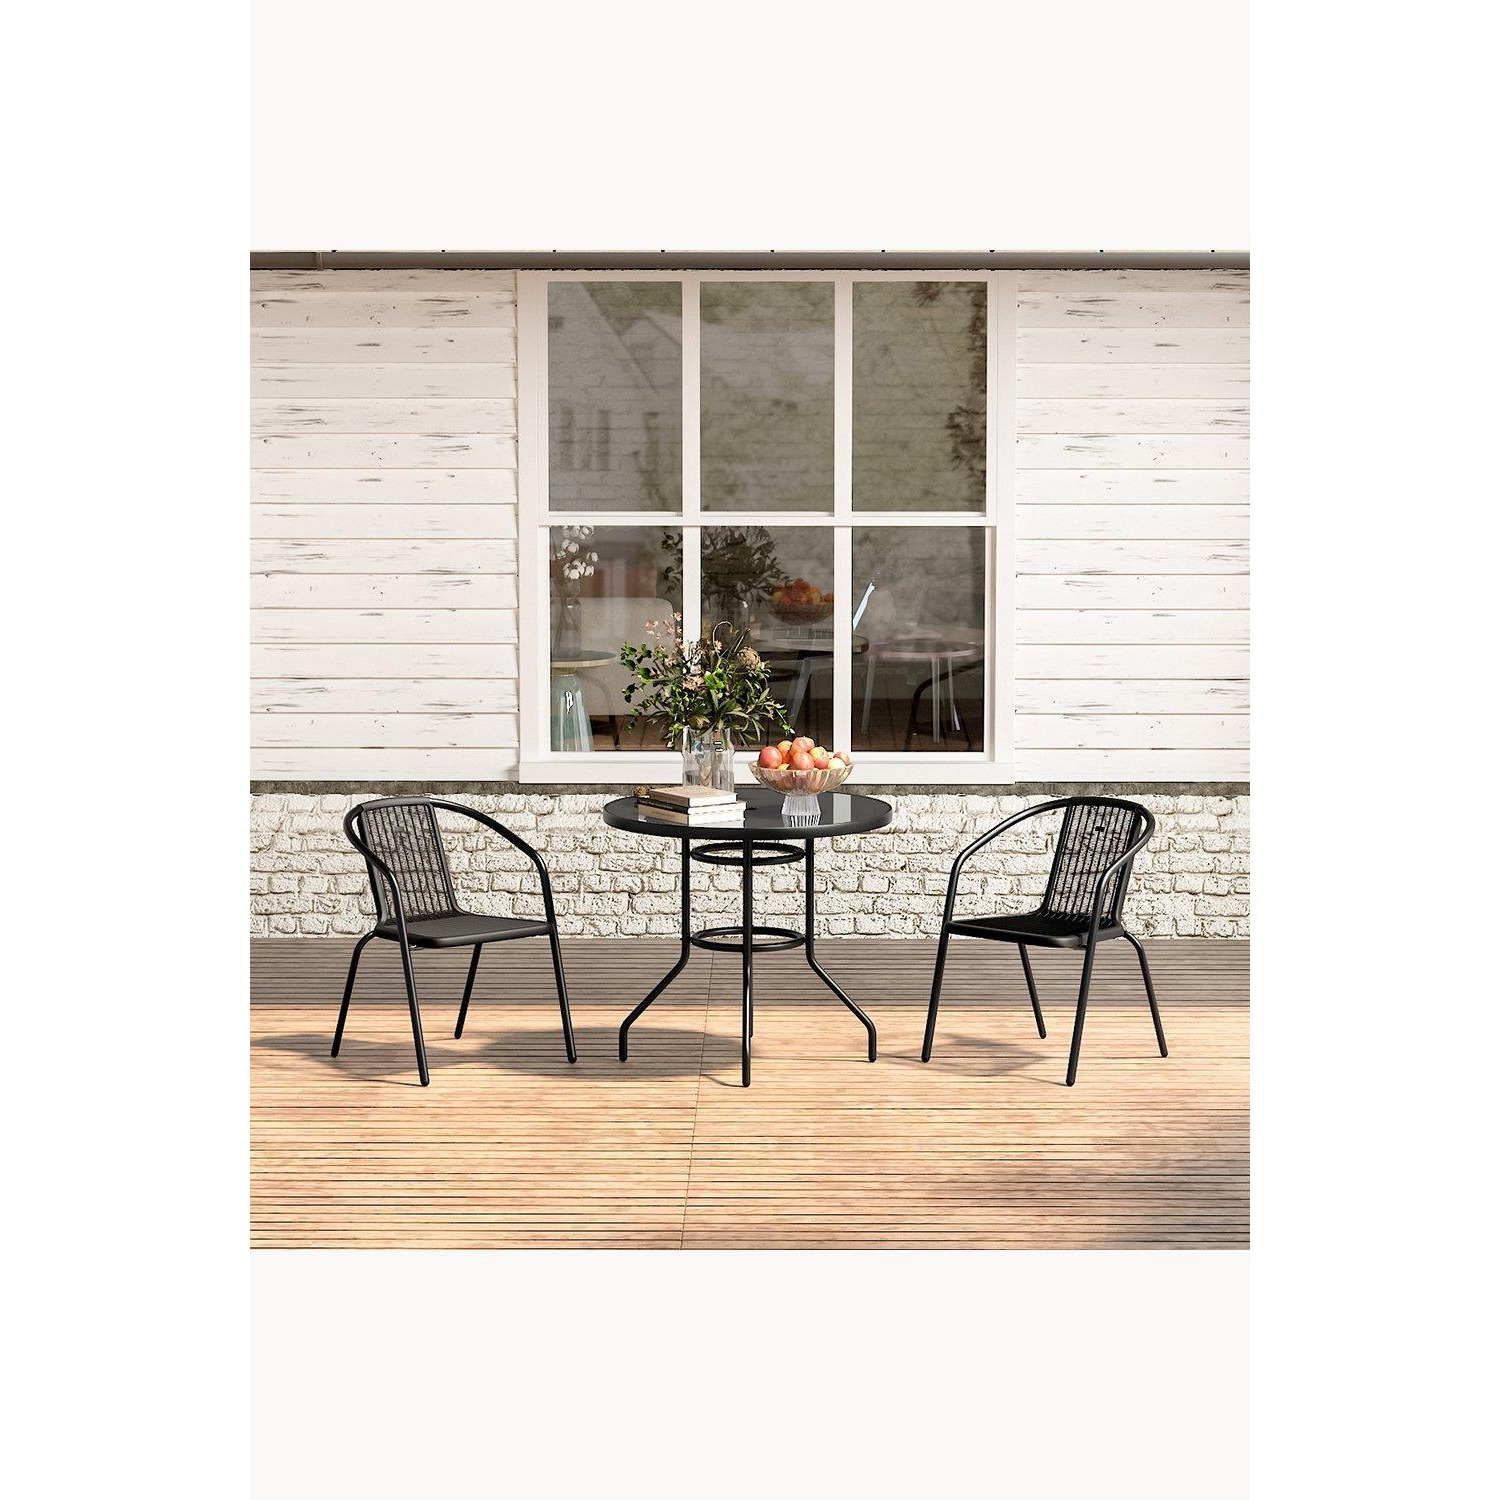 2-Seater Outdoor Garden Dining Bistro Set - image 1